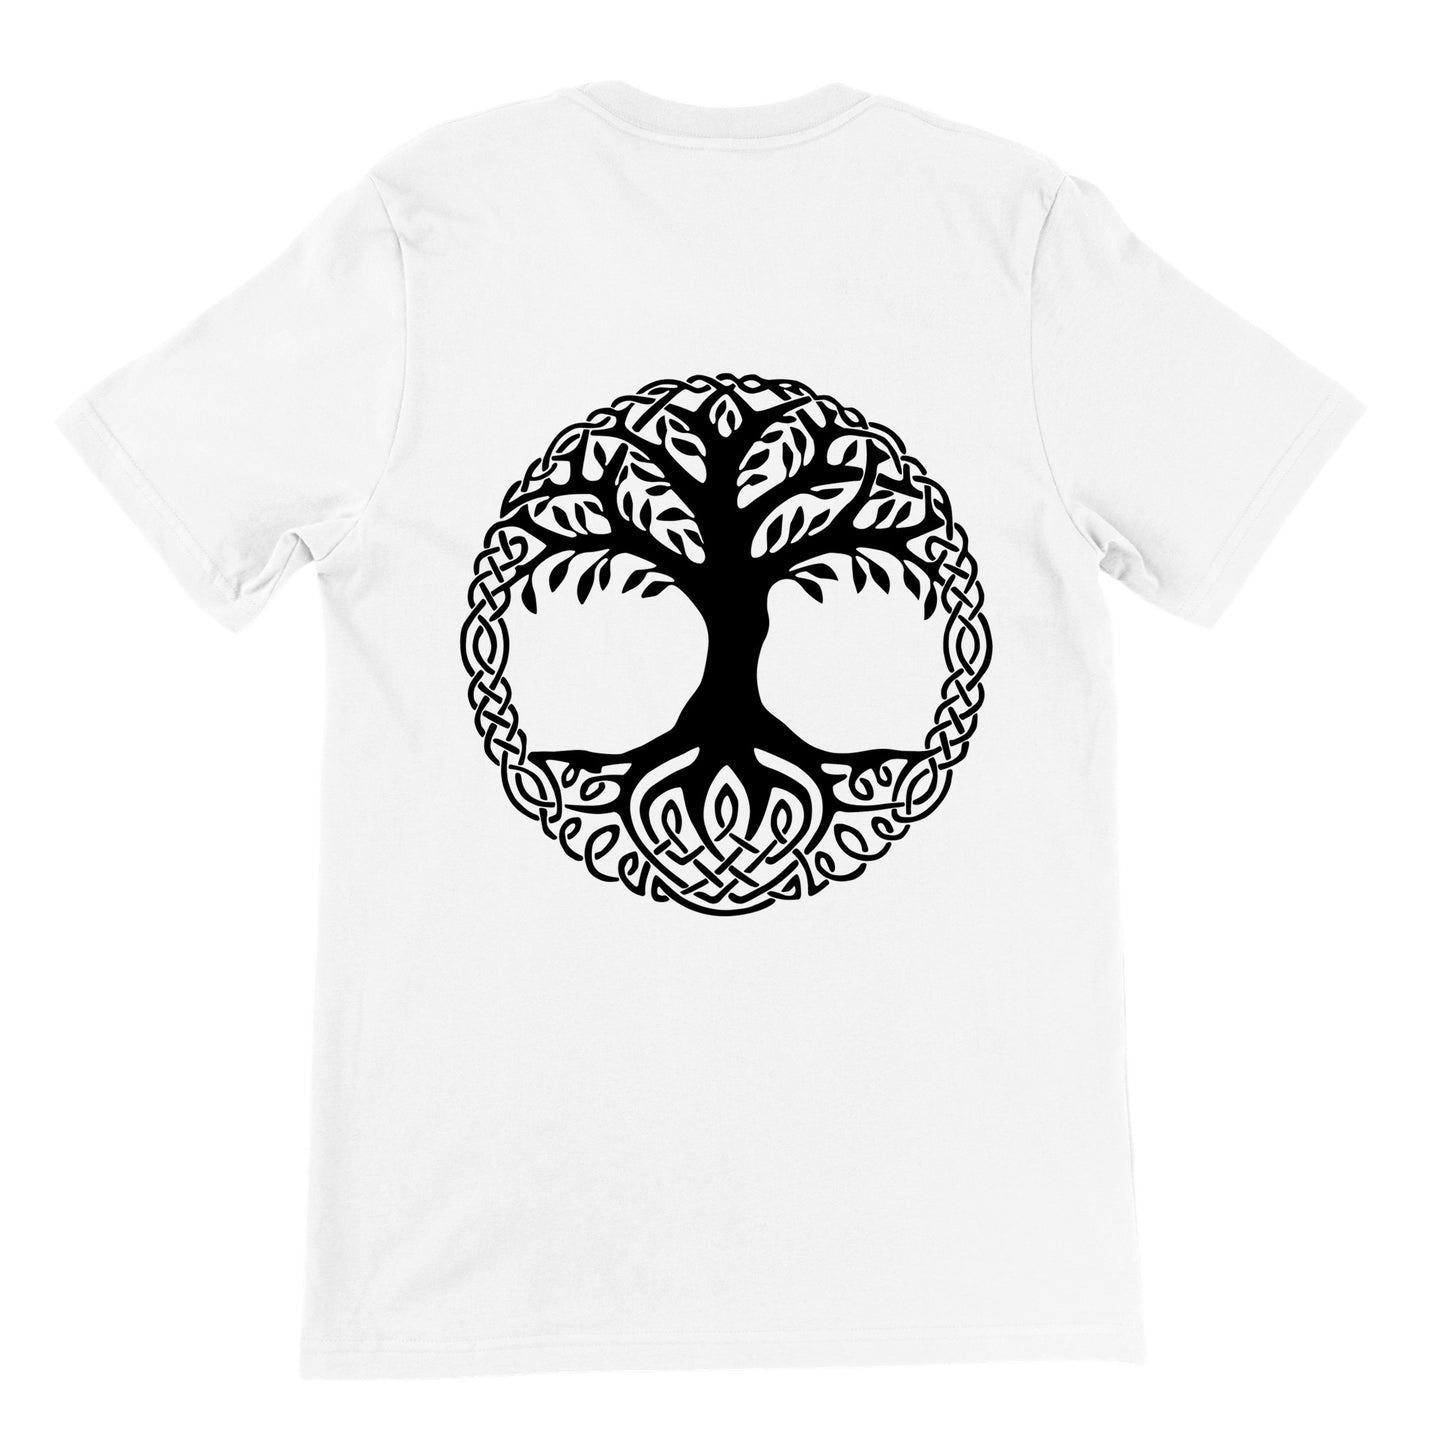 Yggdrasil, the tree of life T-shirt